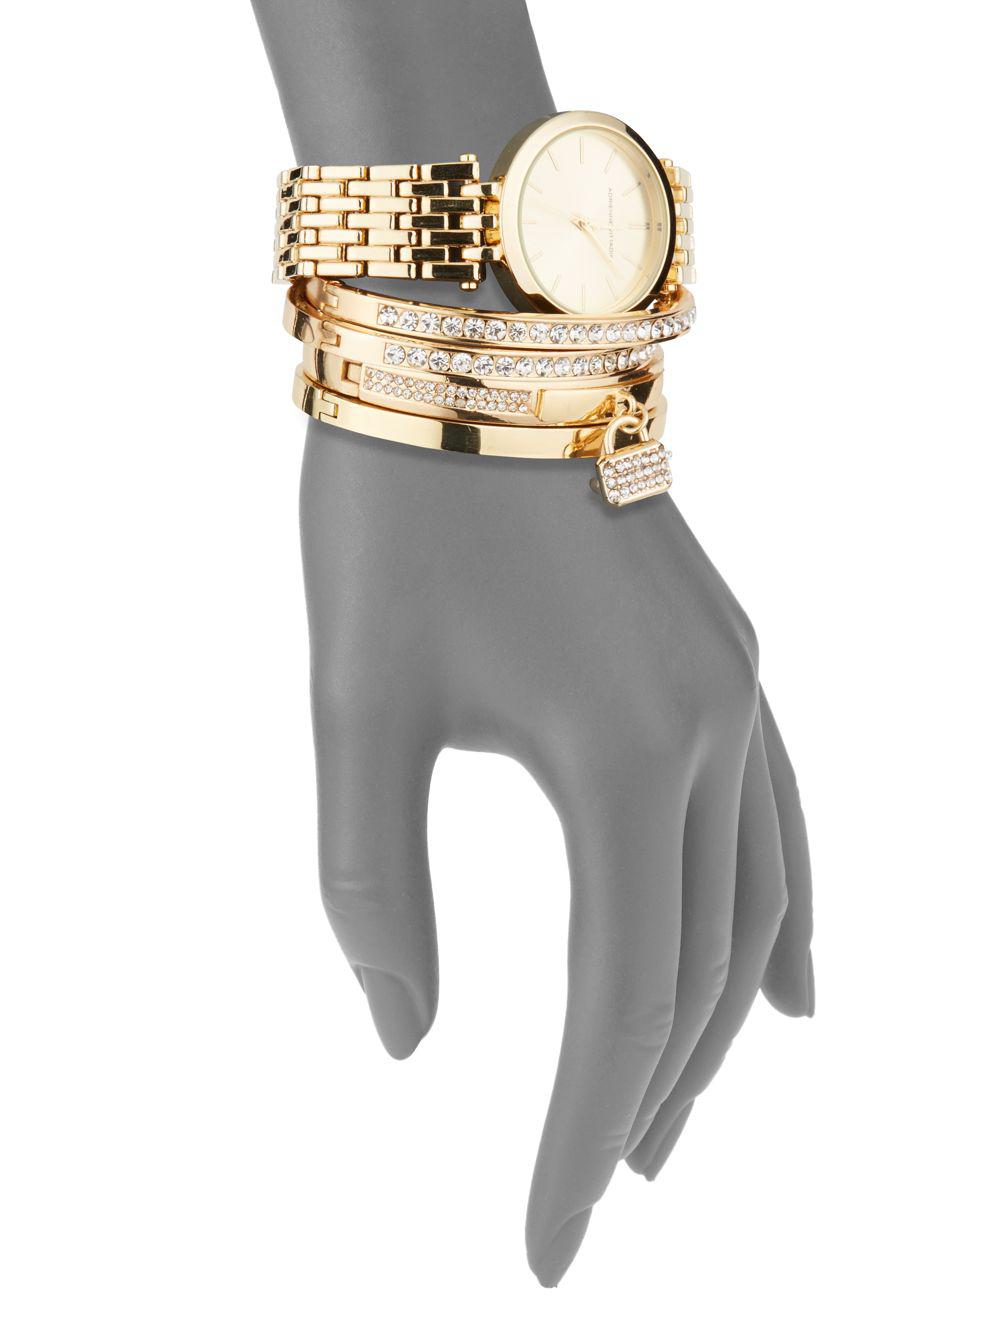 Adrienne Vittadini Women's Watch And Bracelet Set